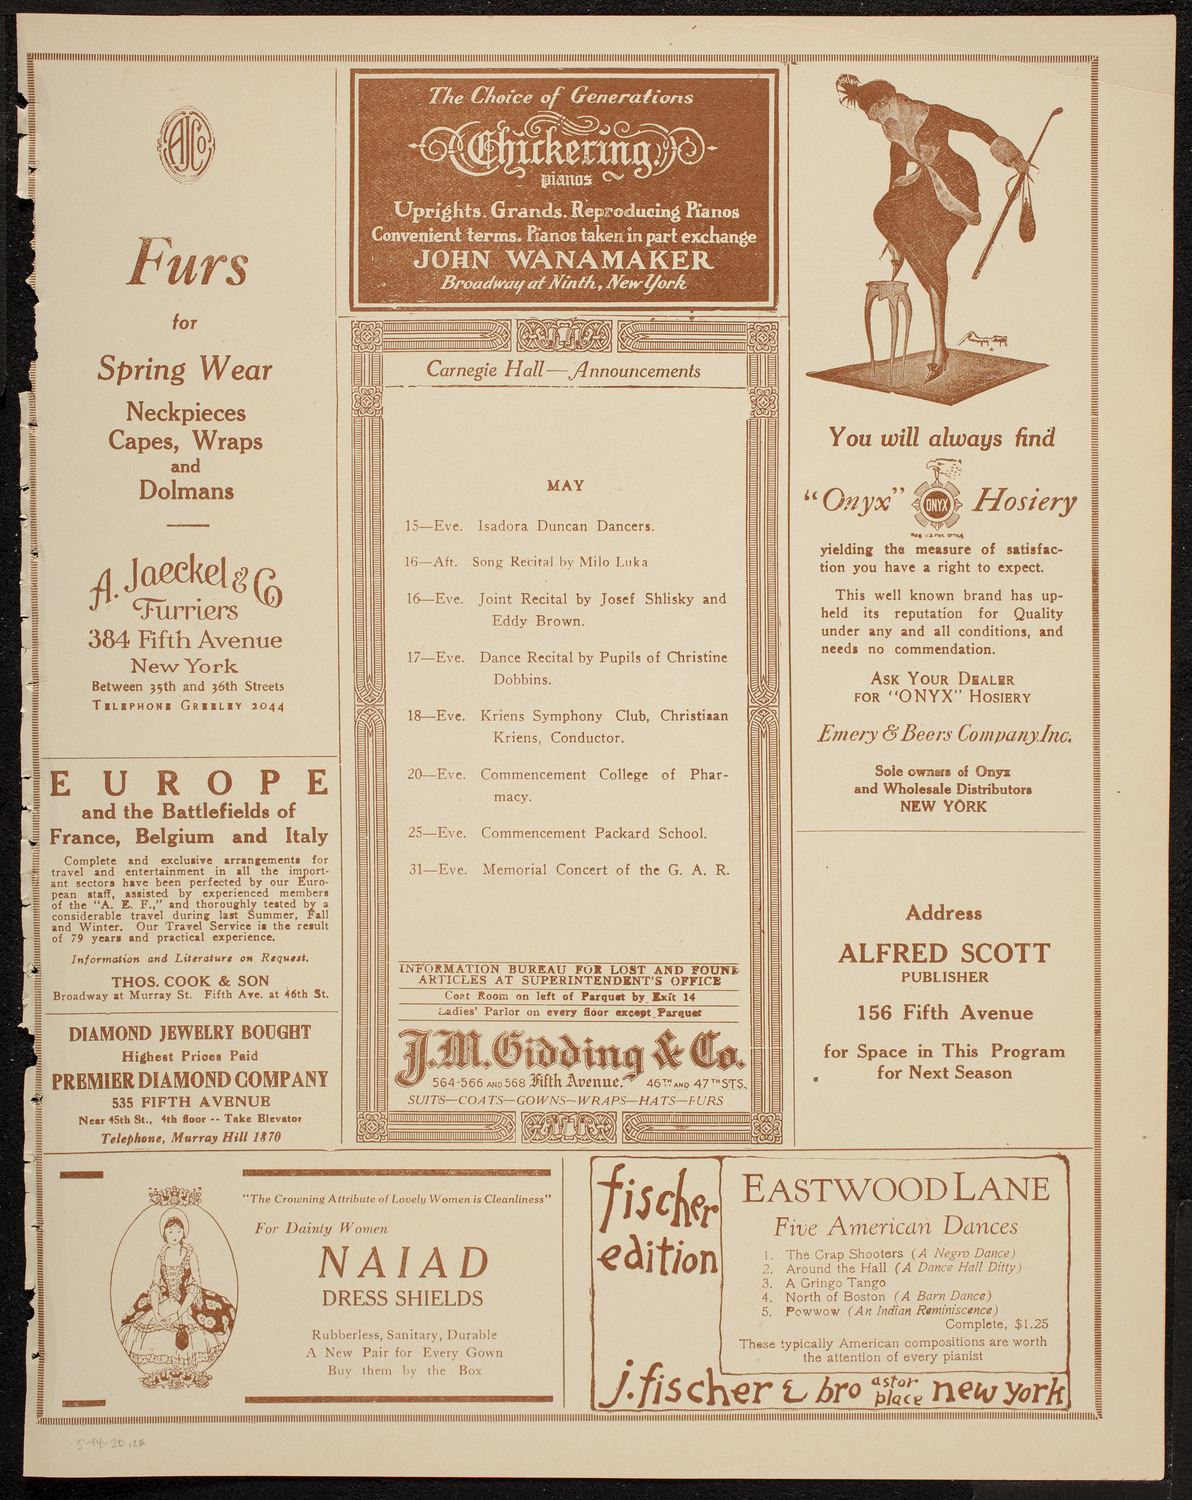 Isadora Duncan Dancers, May 14, 1920, program page 3